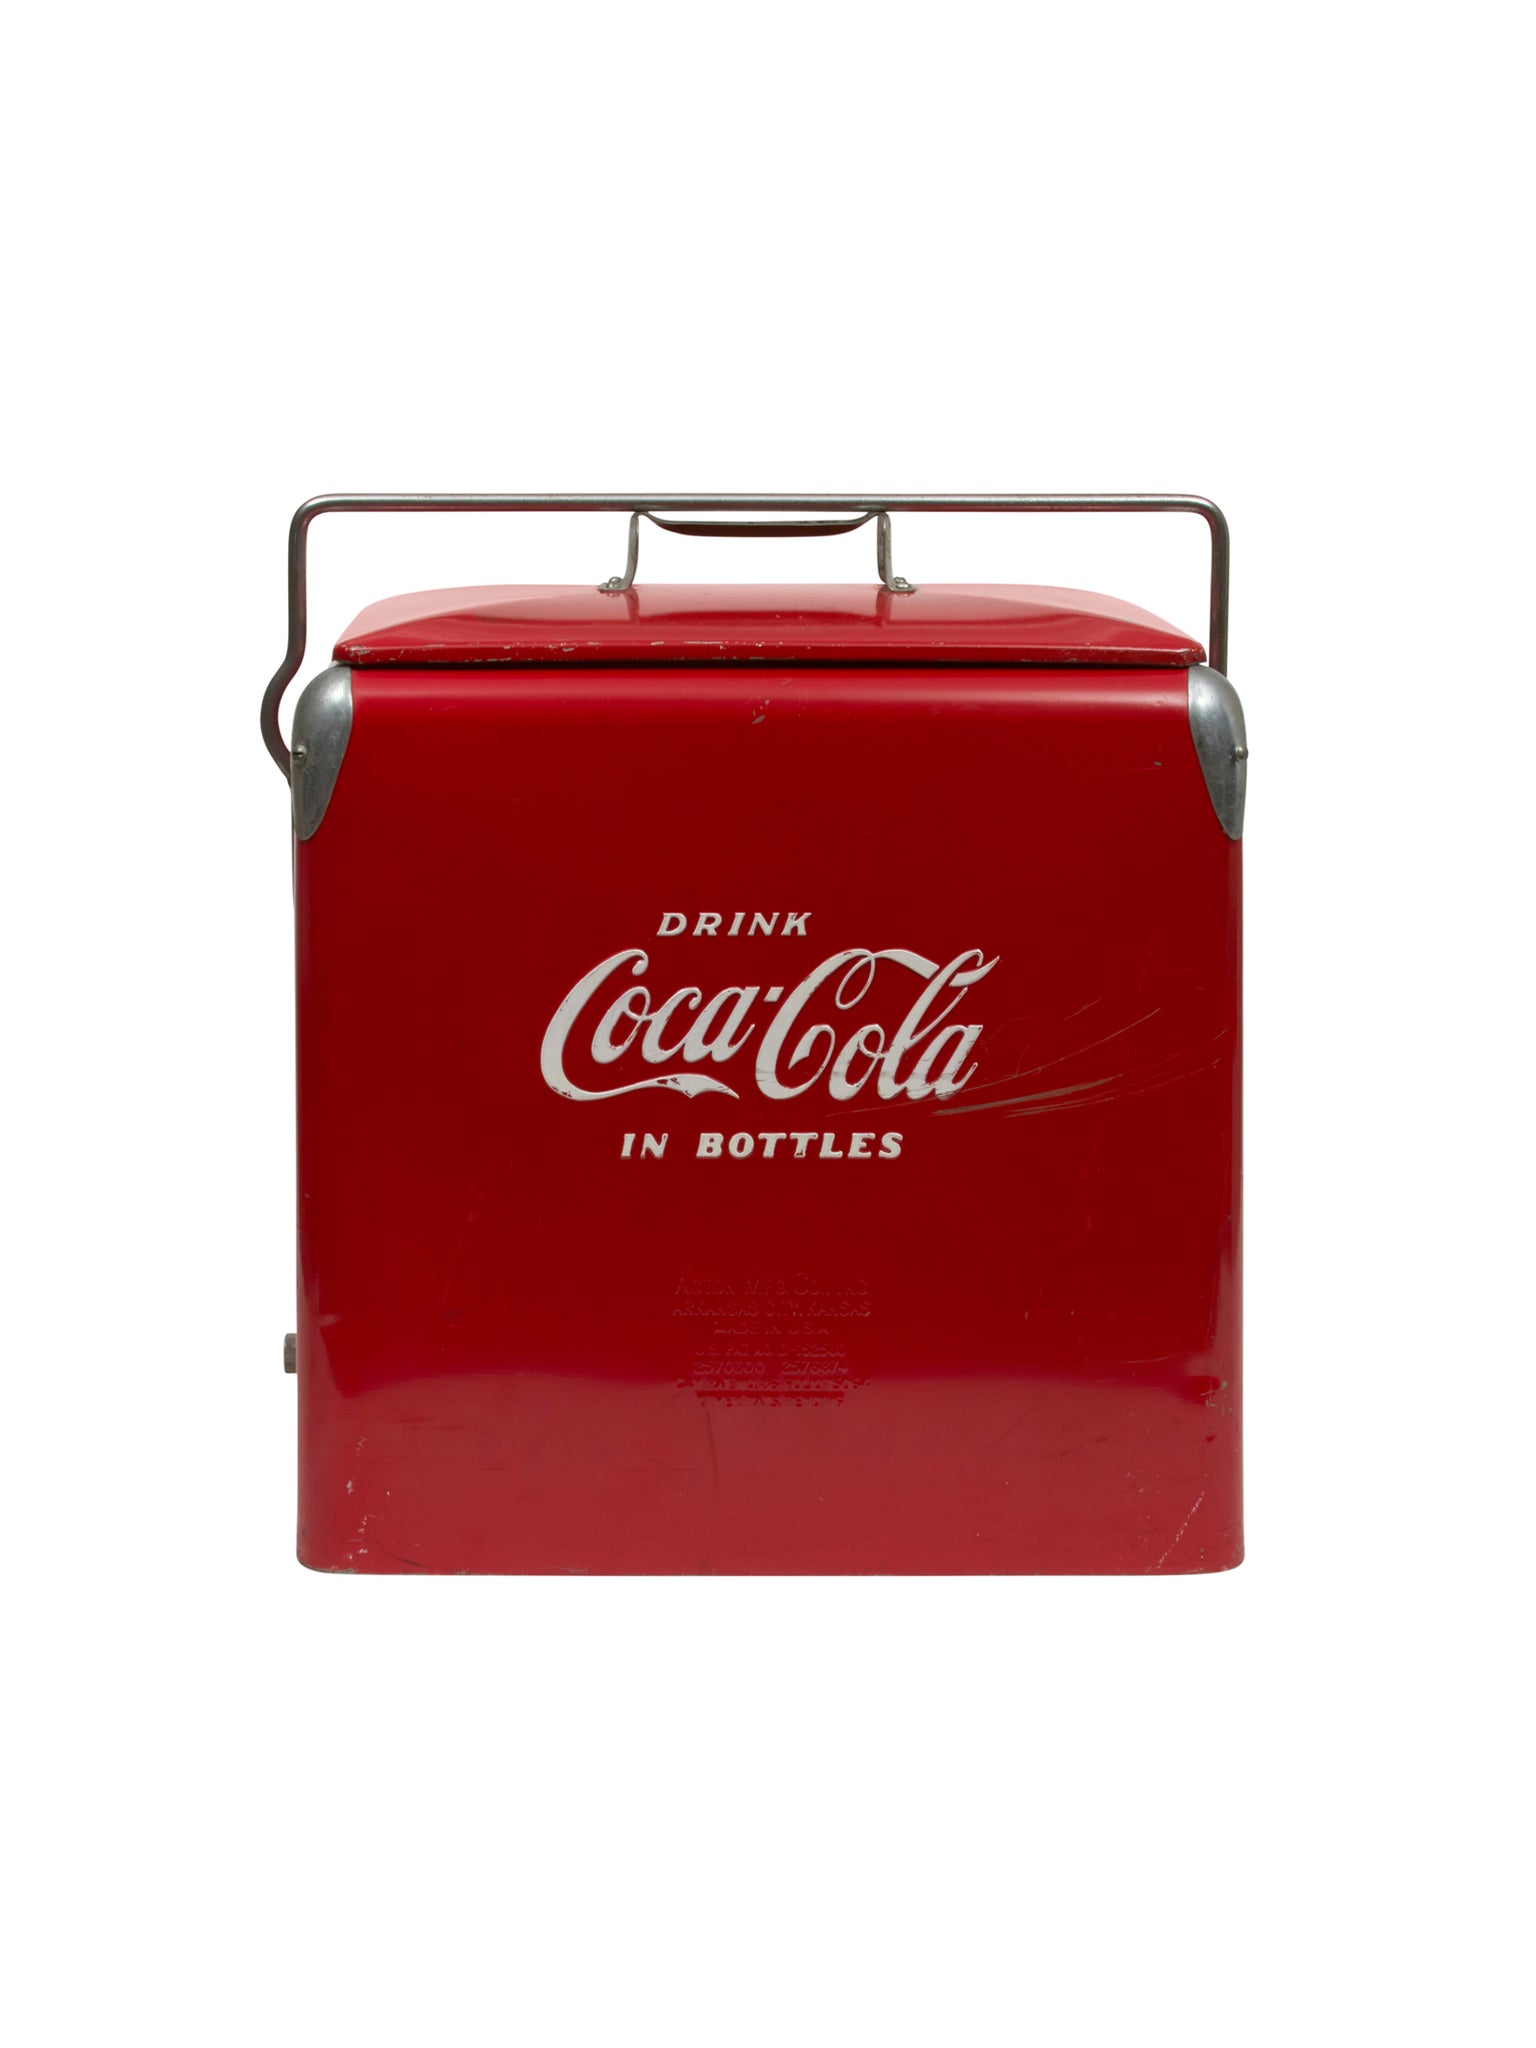 Vintage 1950s Coca-Cola Picnic Cooler with Sandwich Tray Weston Table